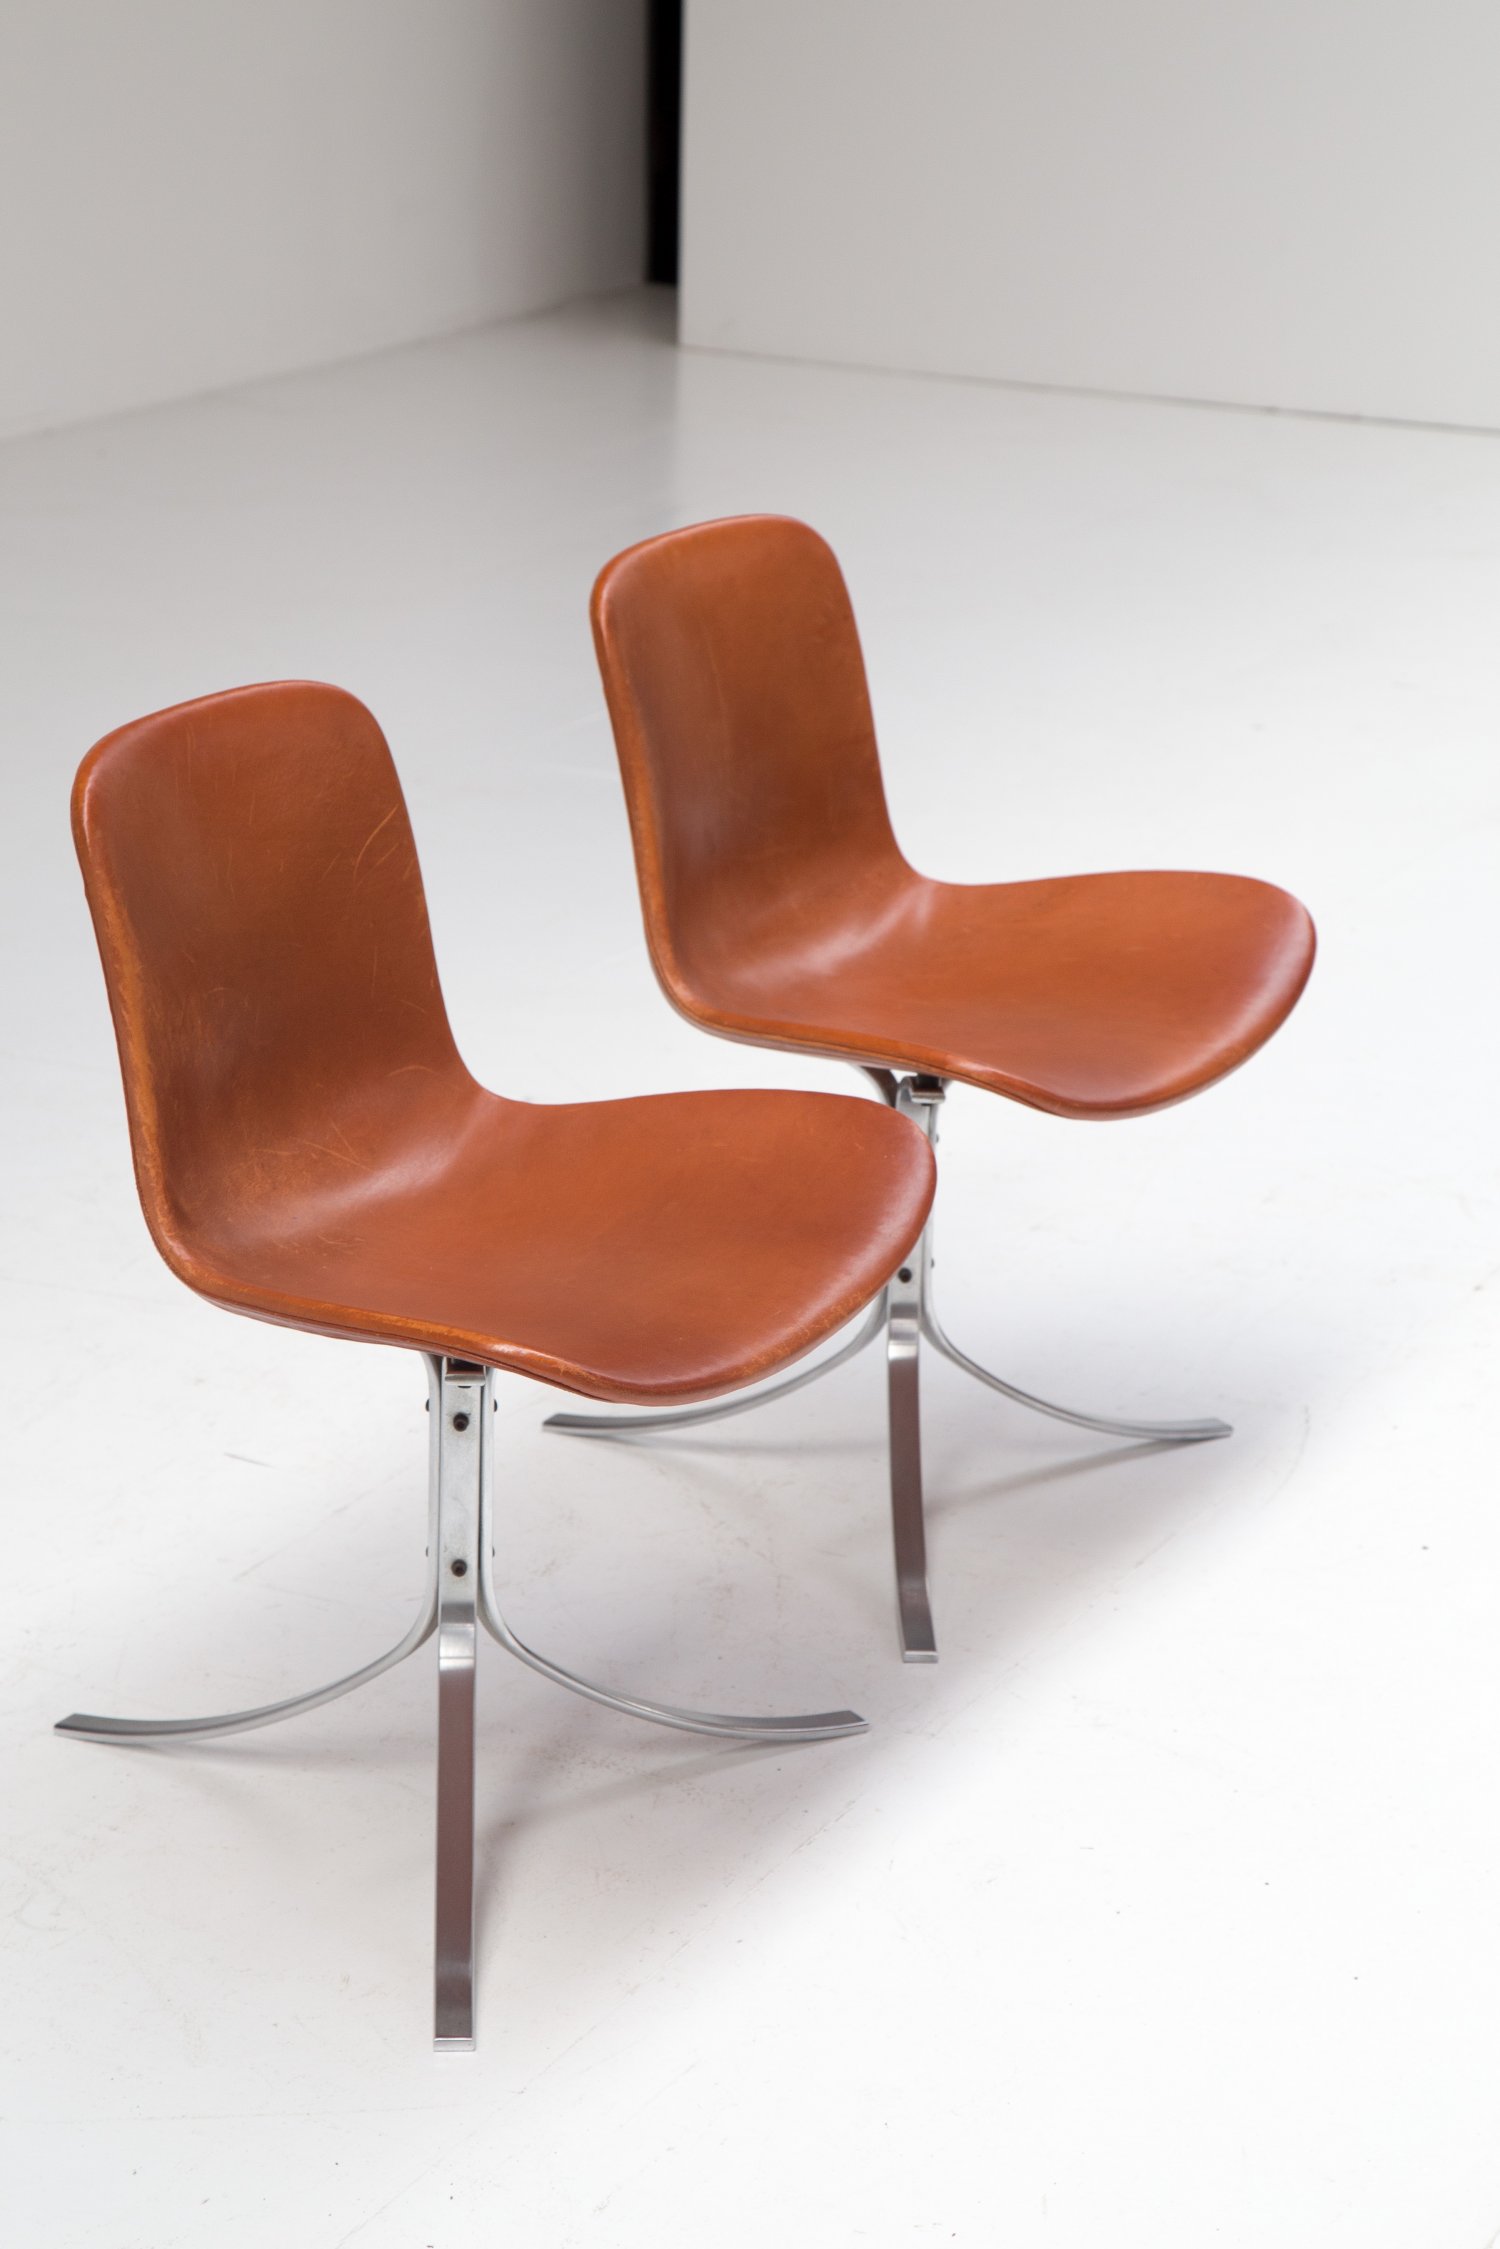 Pair of PK9 chairs by Poul Kjaerholm